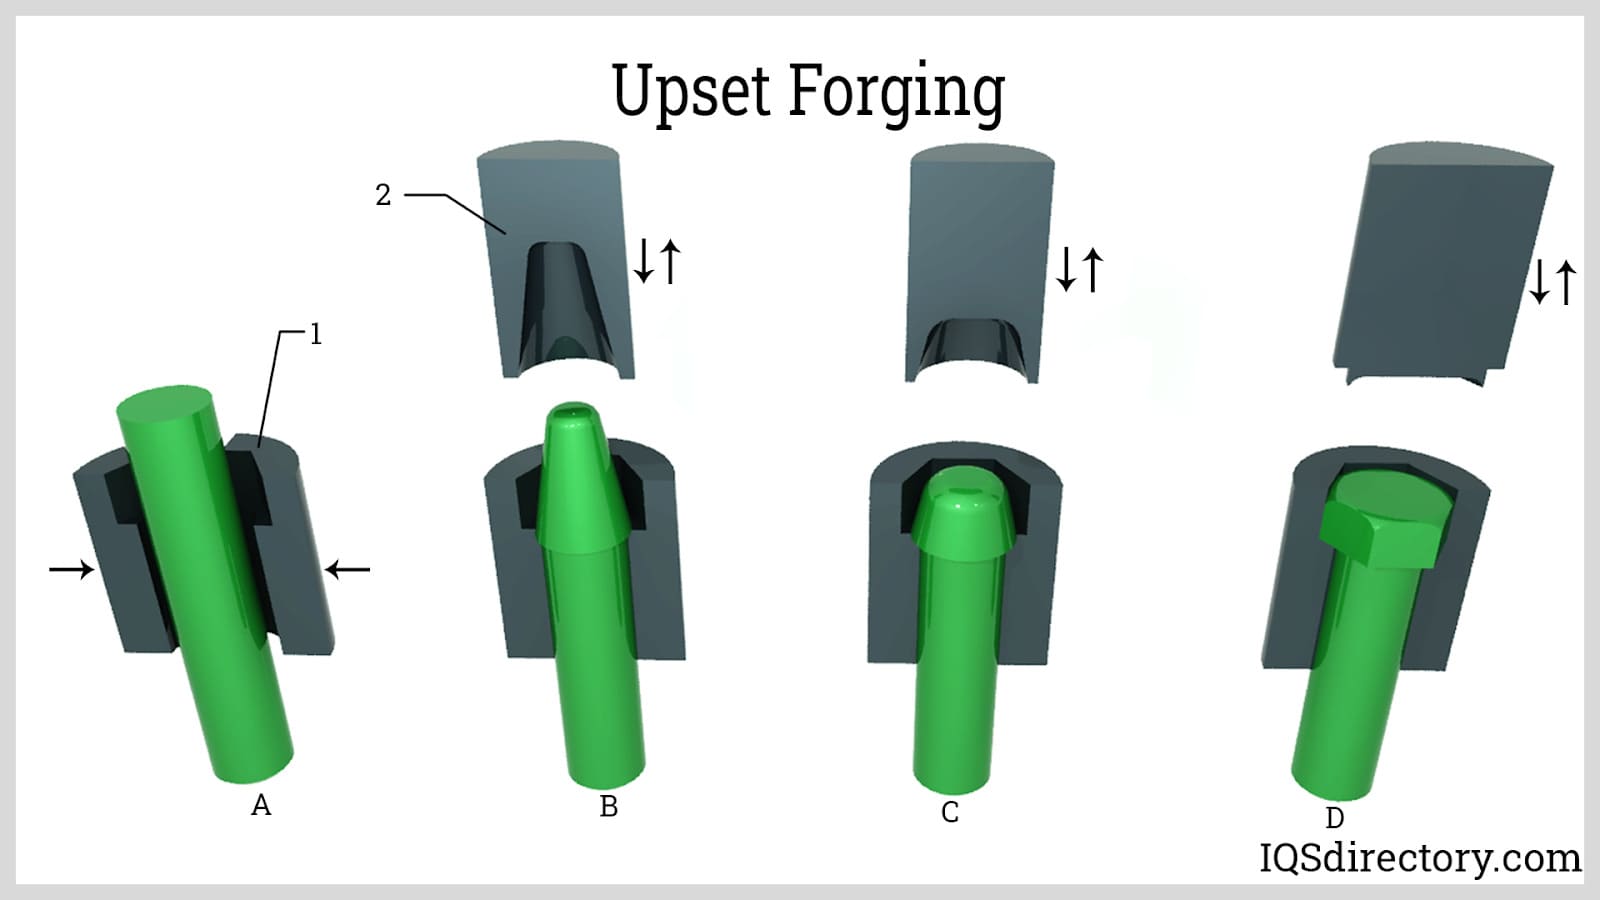 Upset Forging